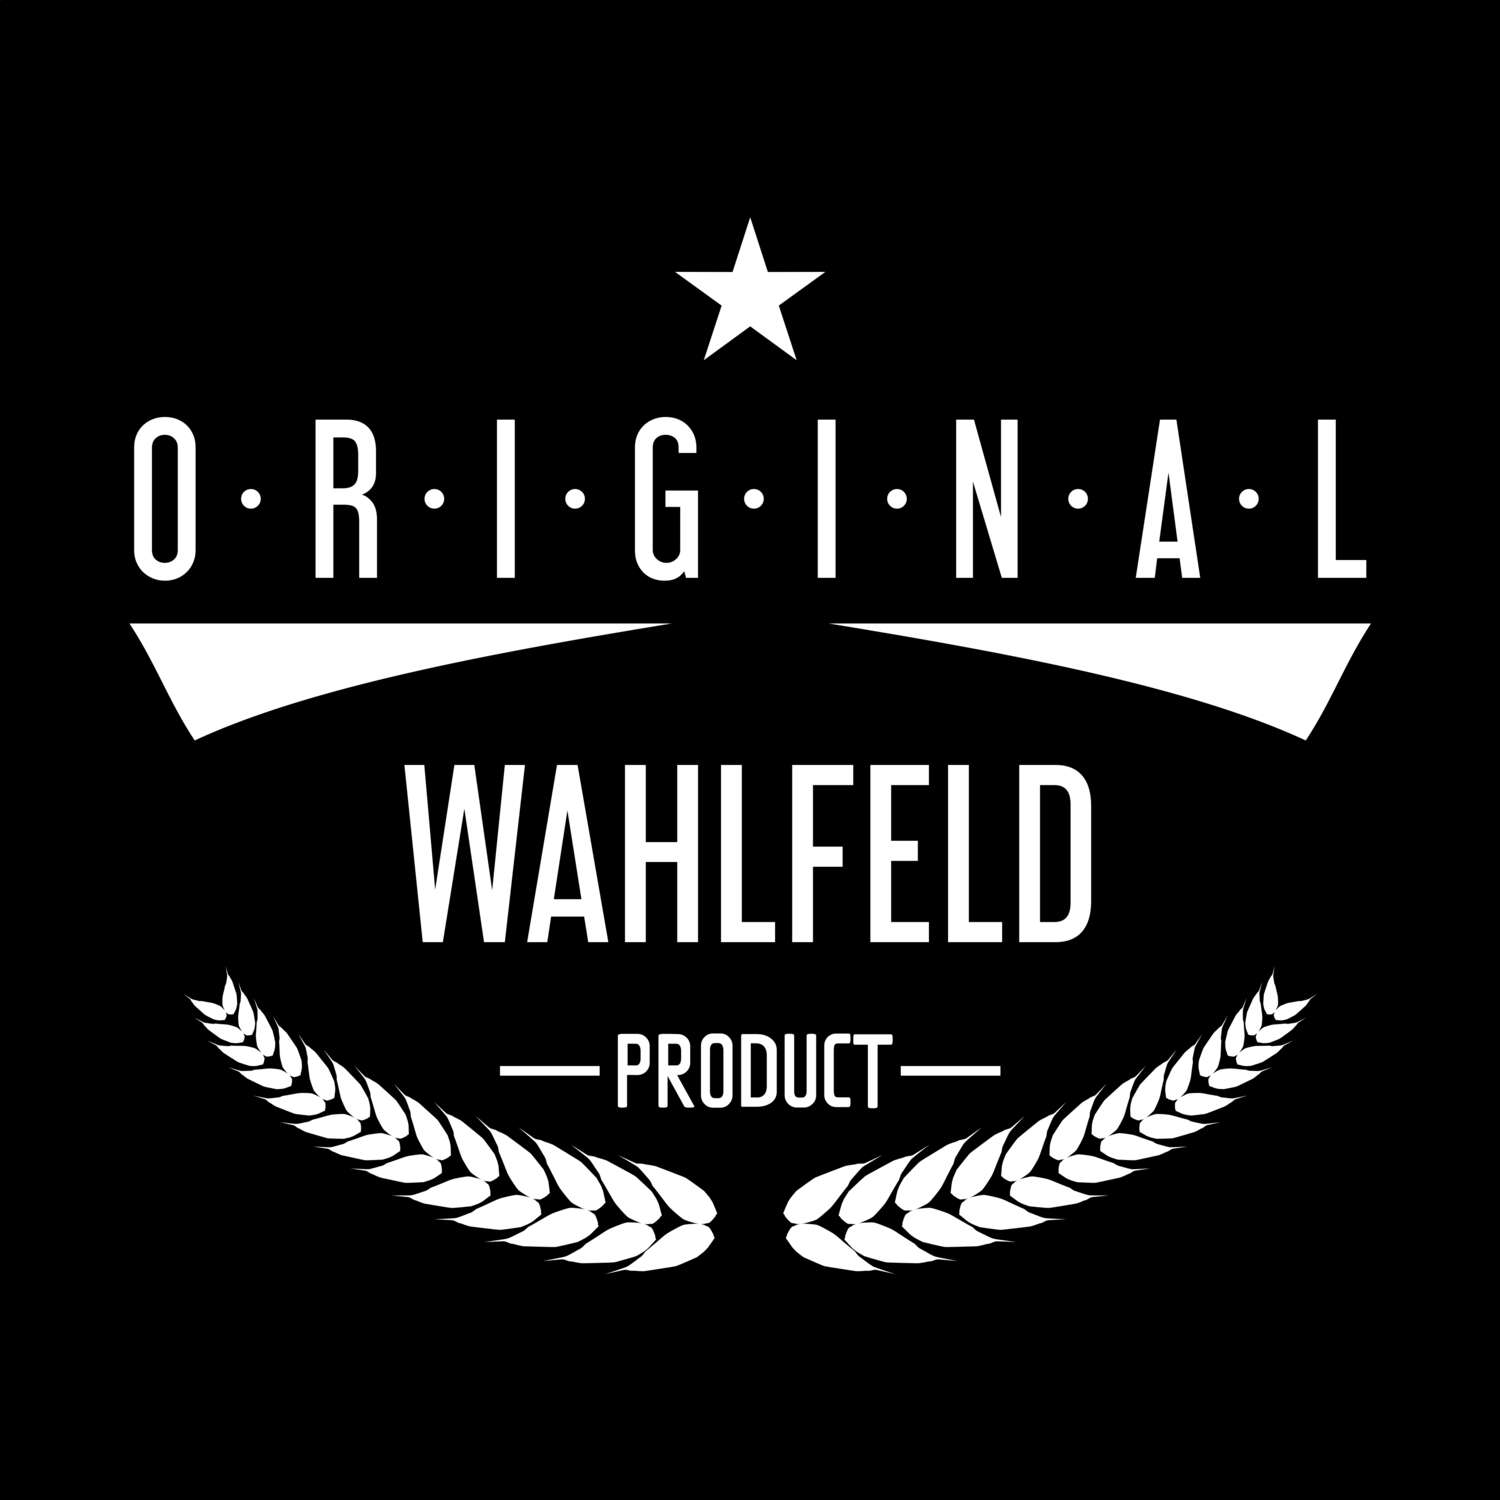 Wahlfeld T-Shirt »Original Product«